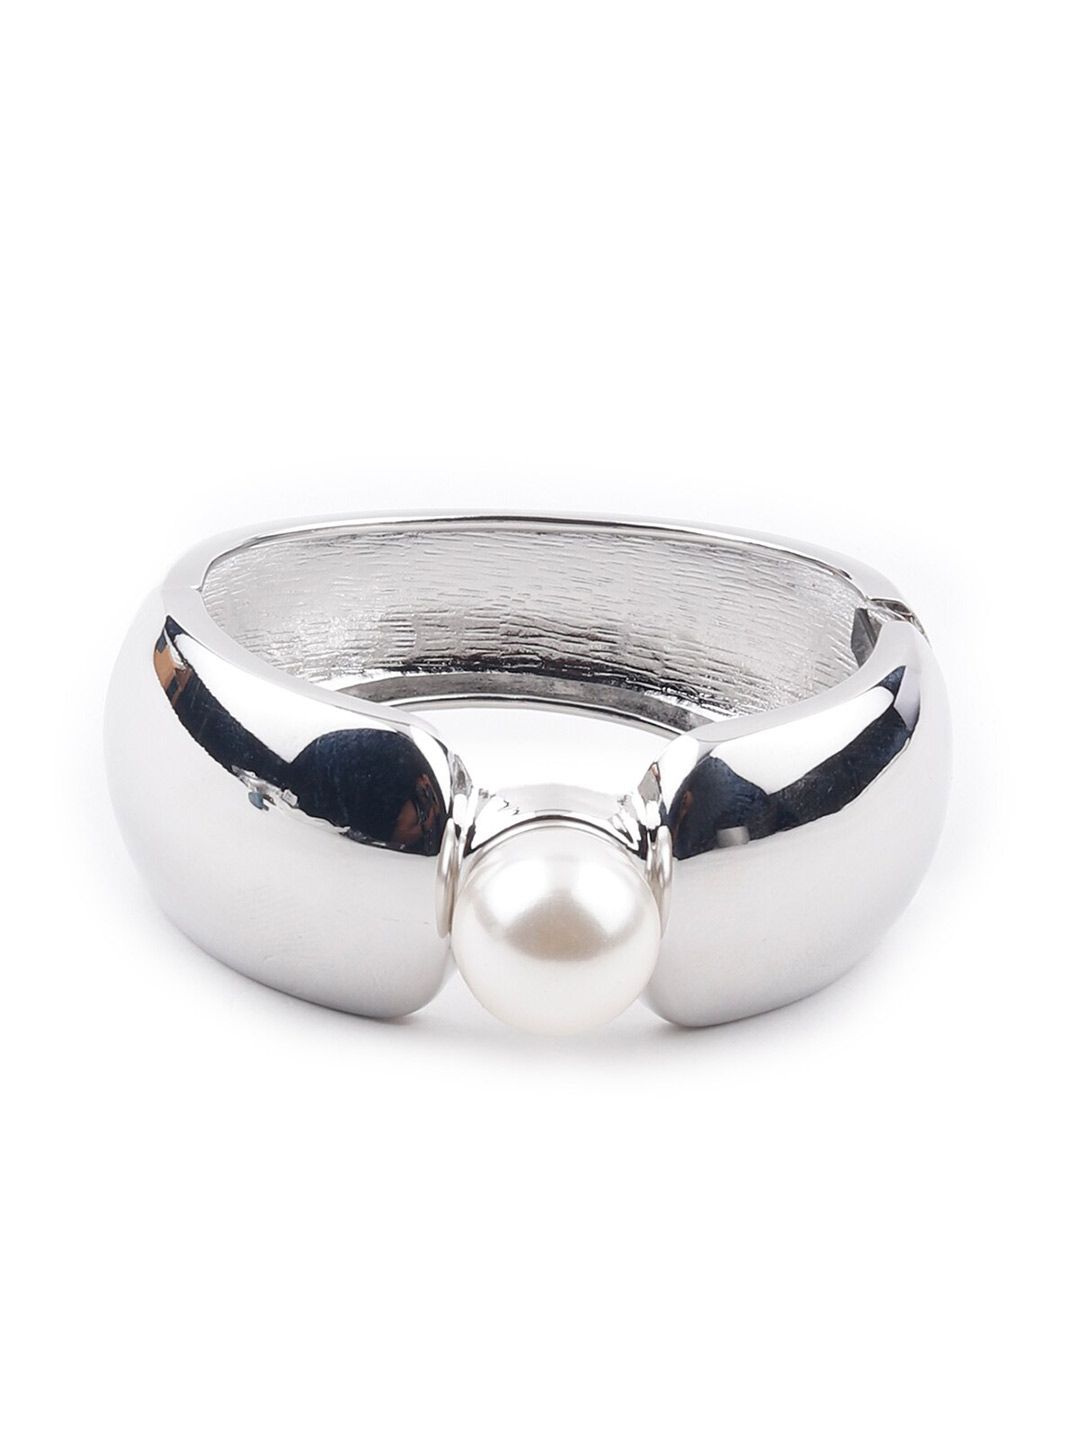 ODETTE Women Silver-Toned & White Cuff Bracelet Price in India